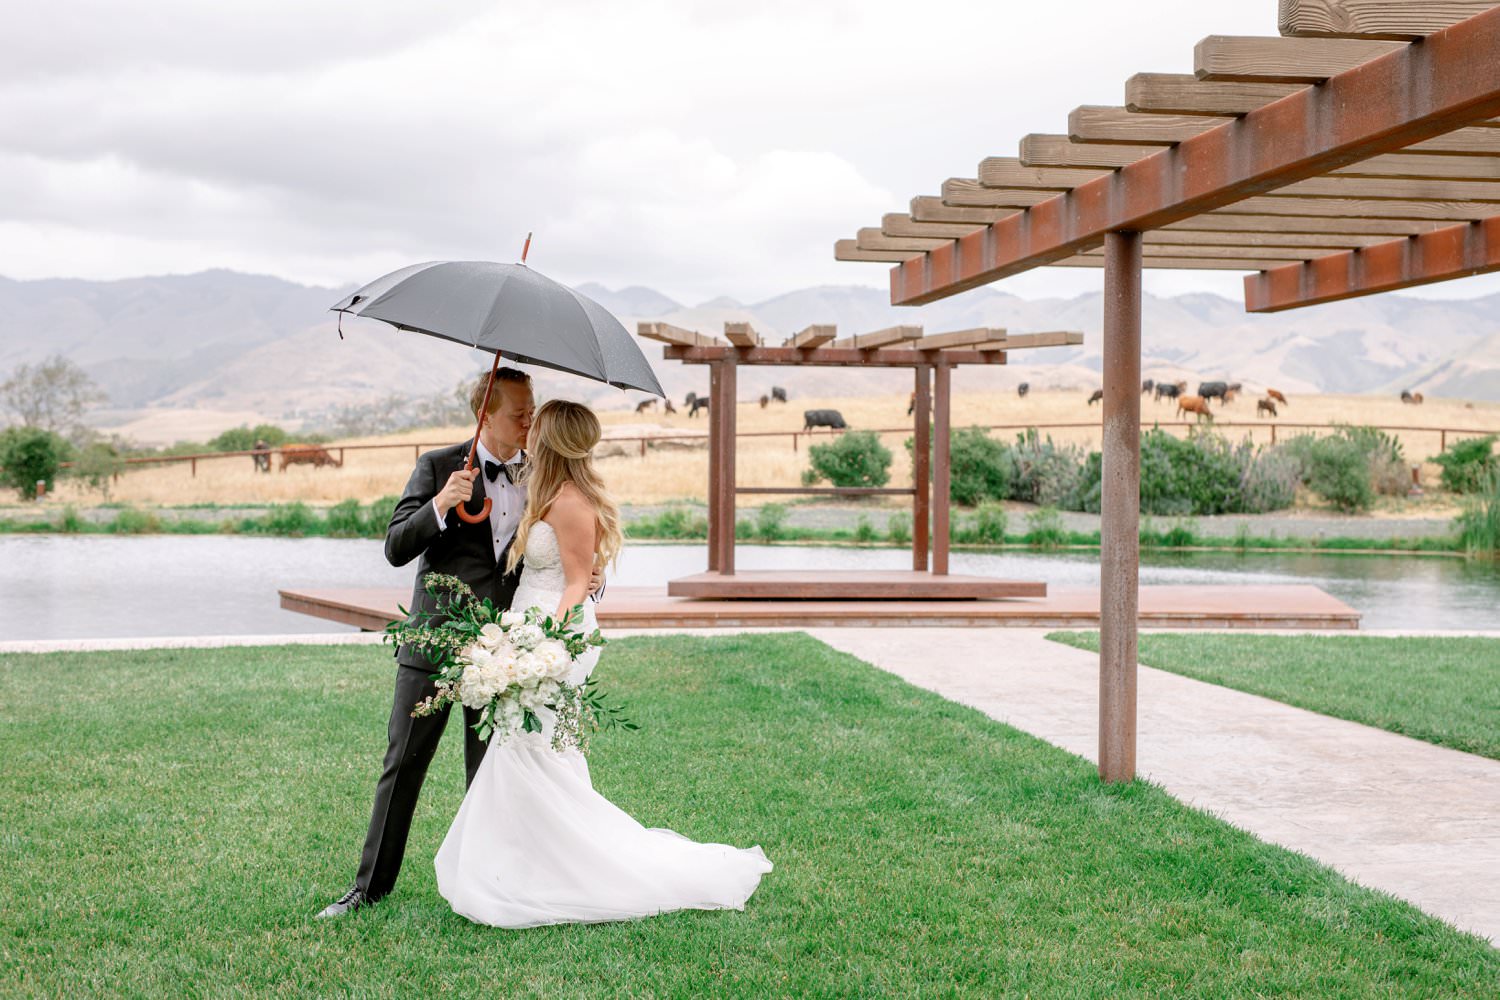 Rainy day wedding photos